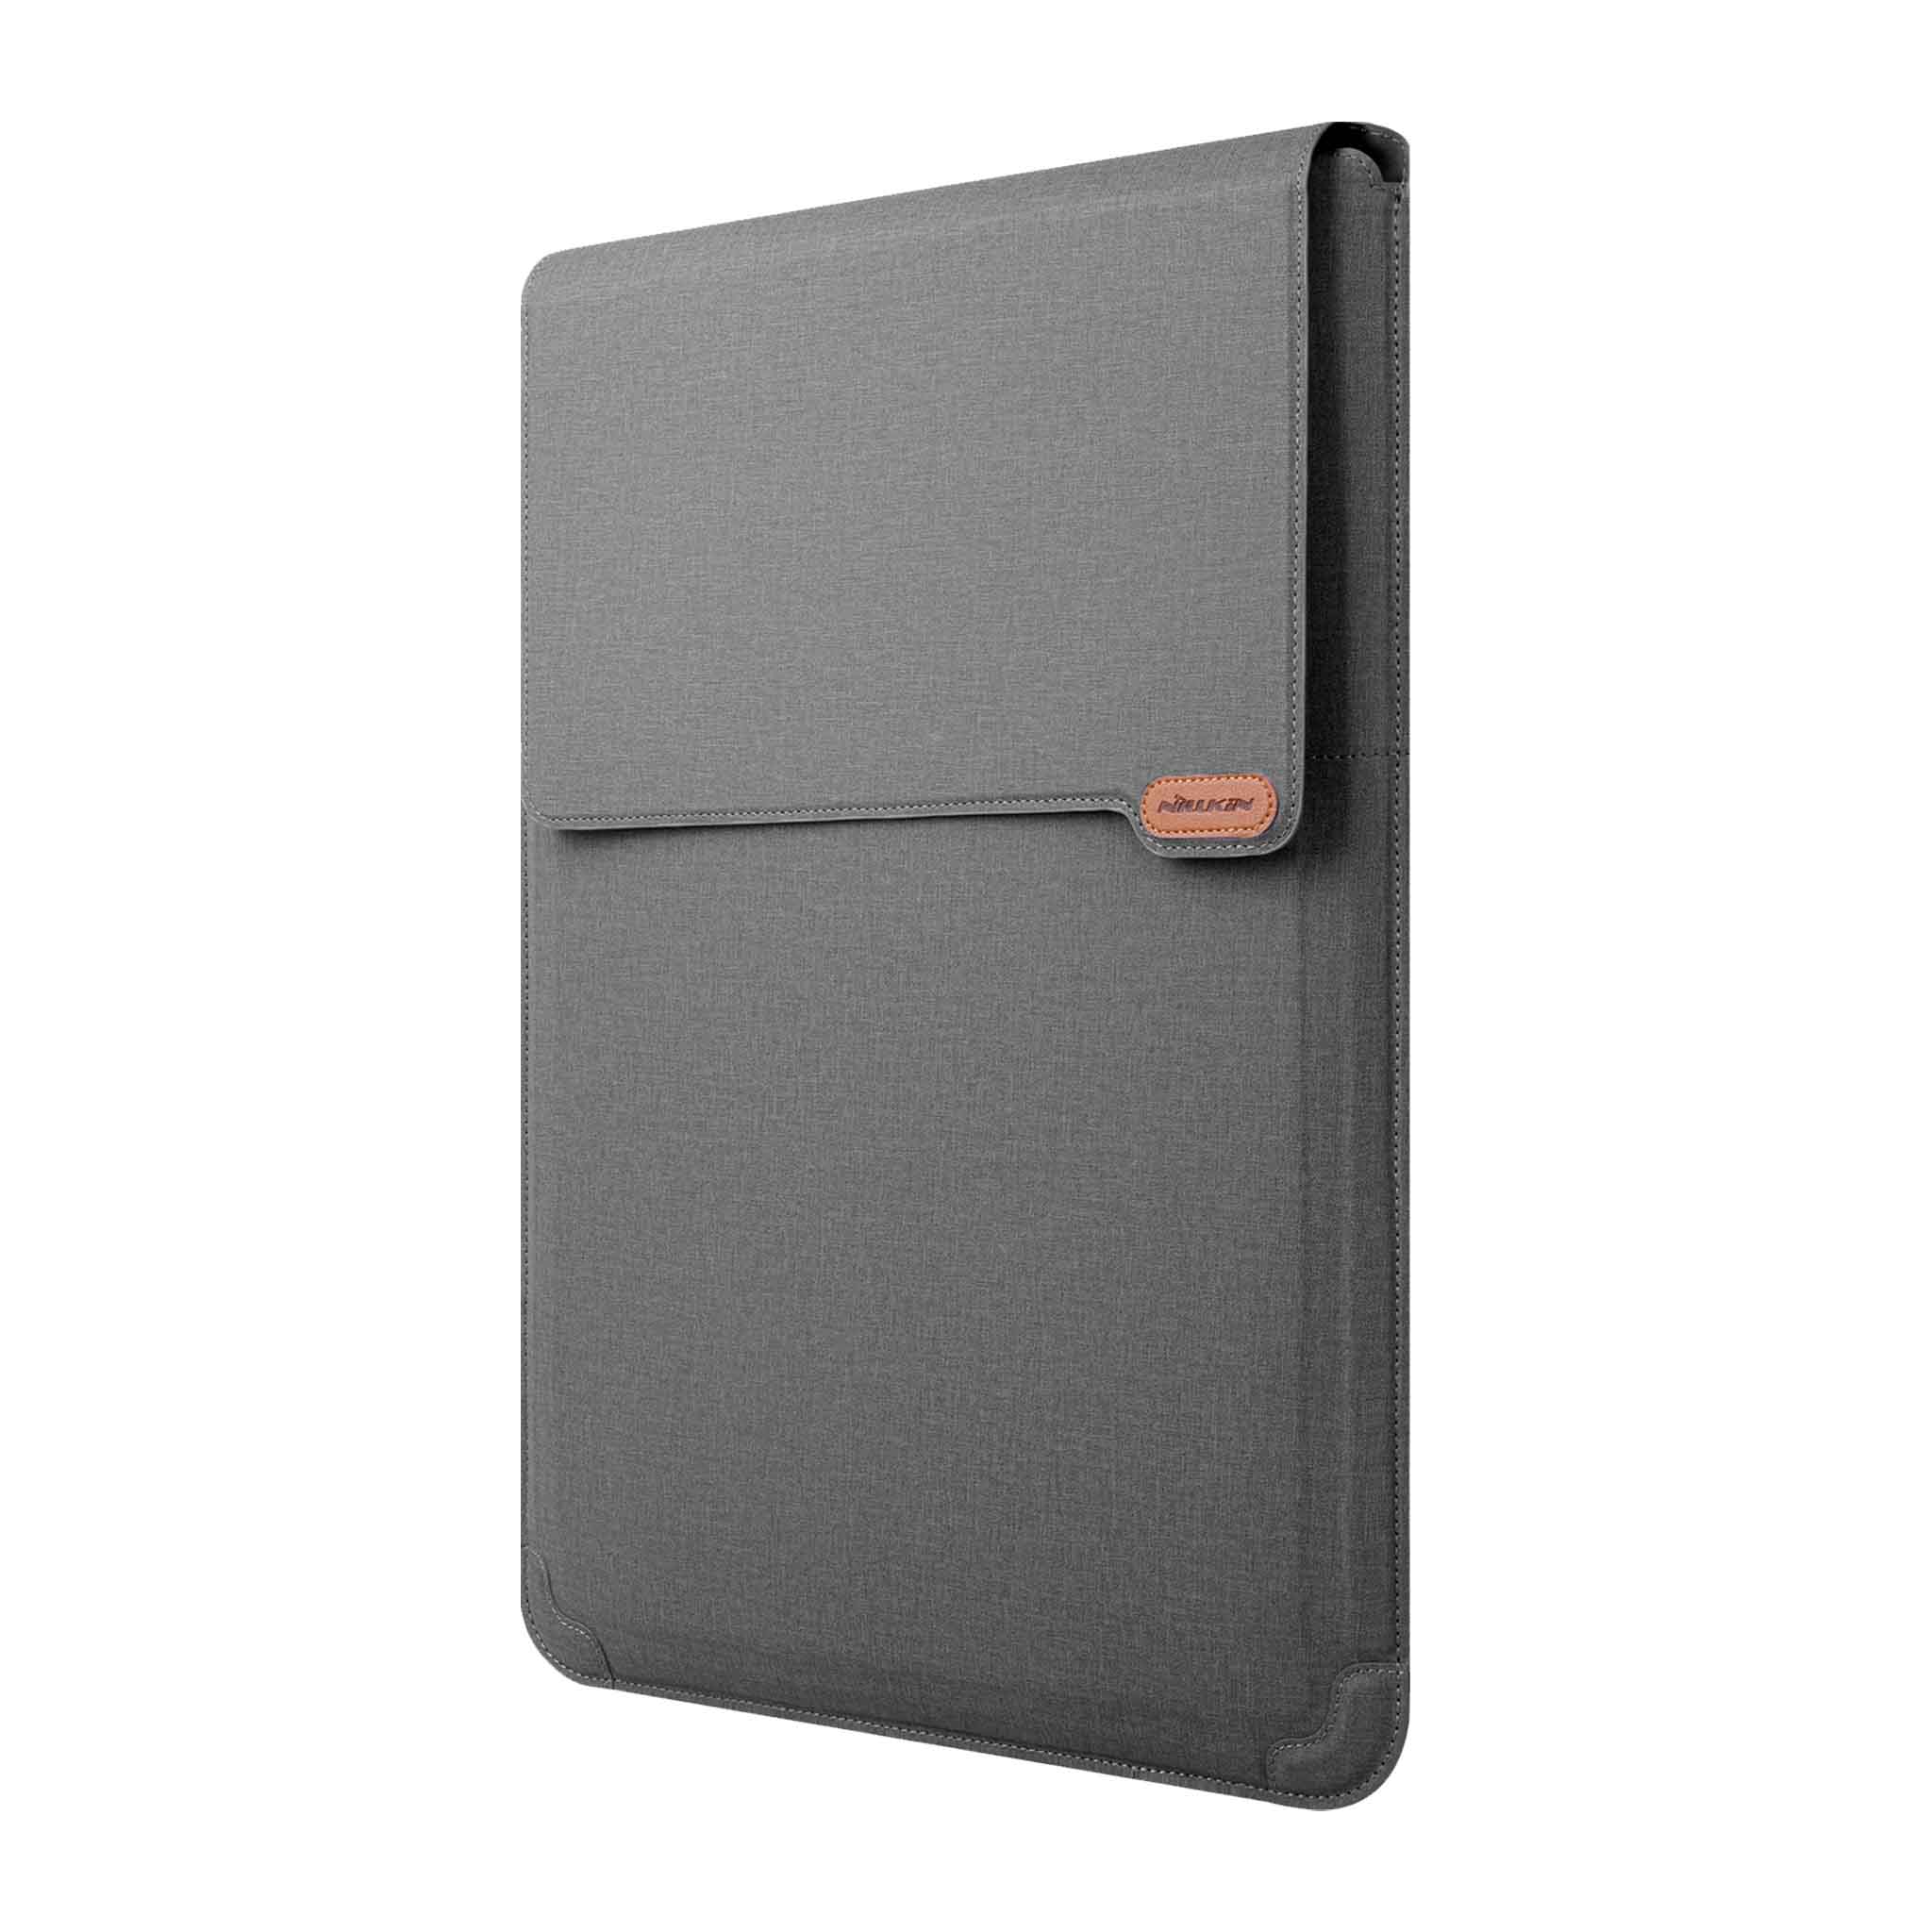 Notebook 16.1 inch / Grey